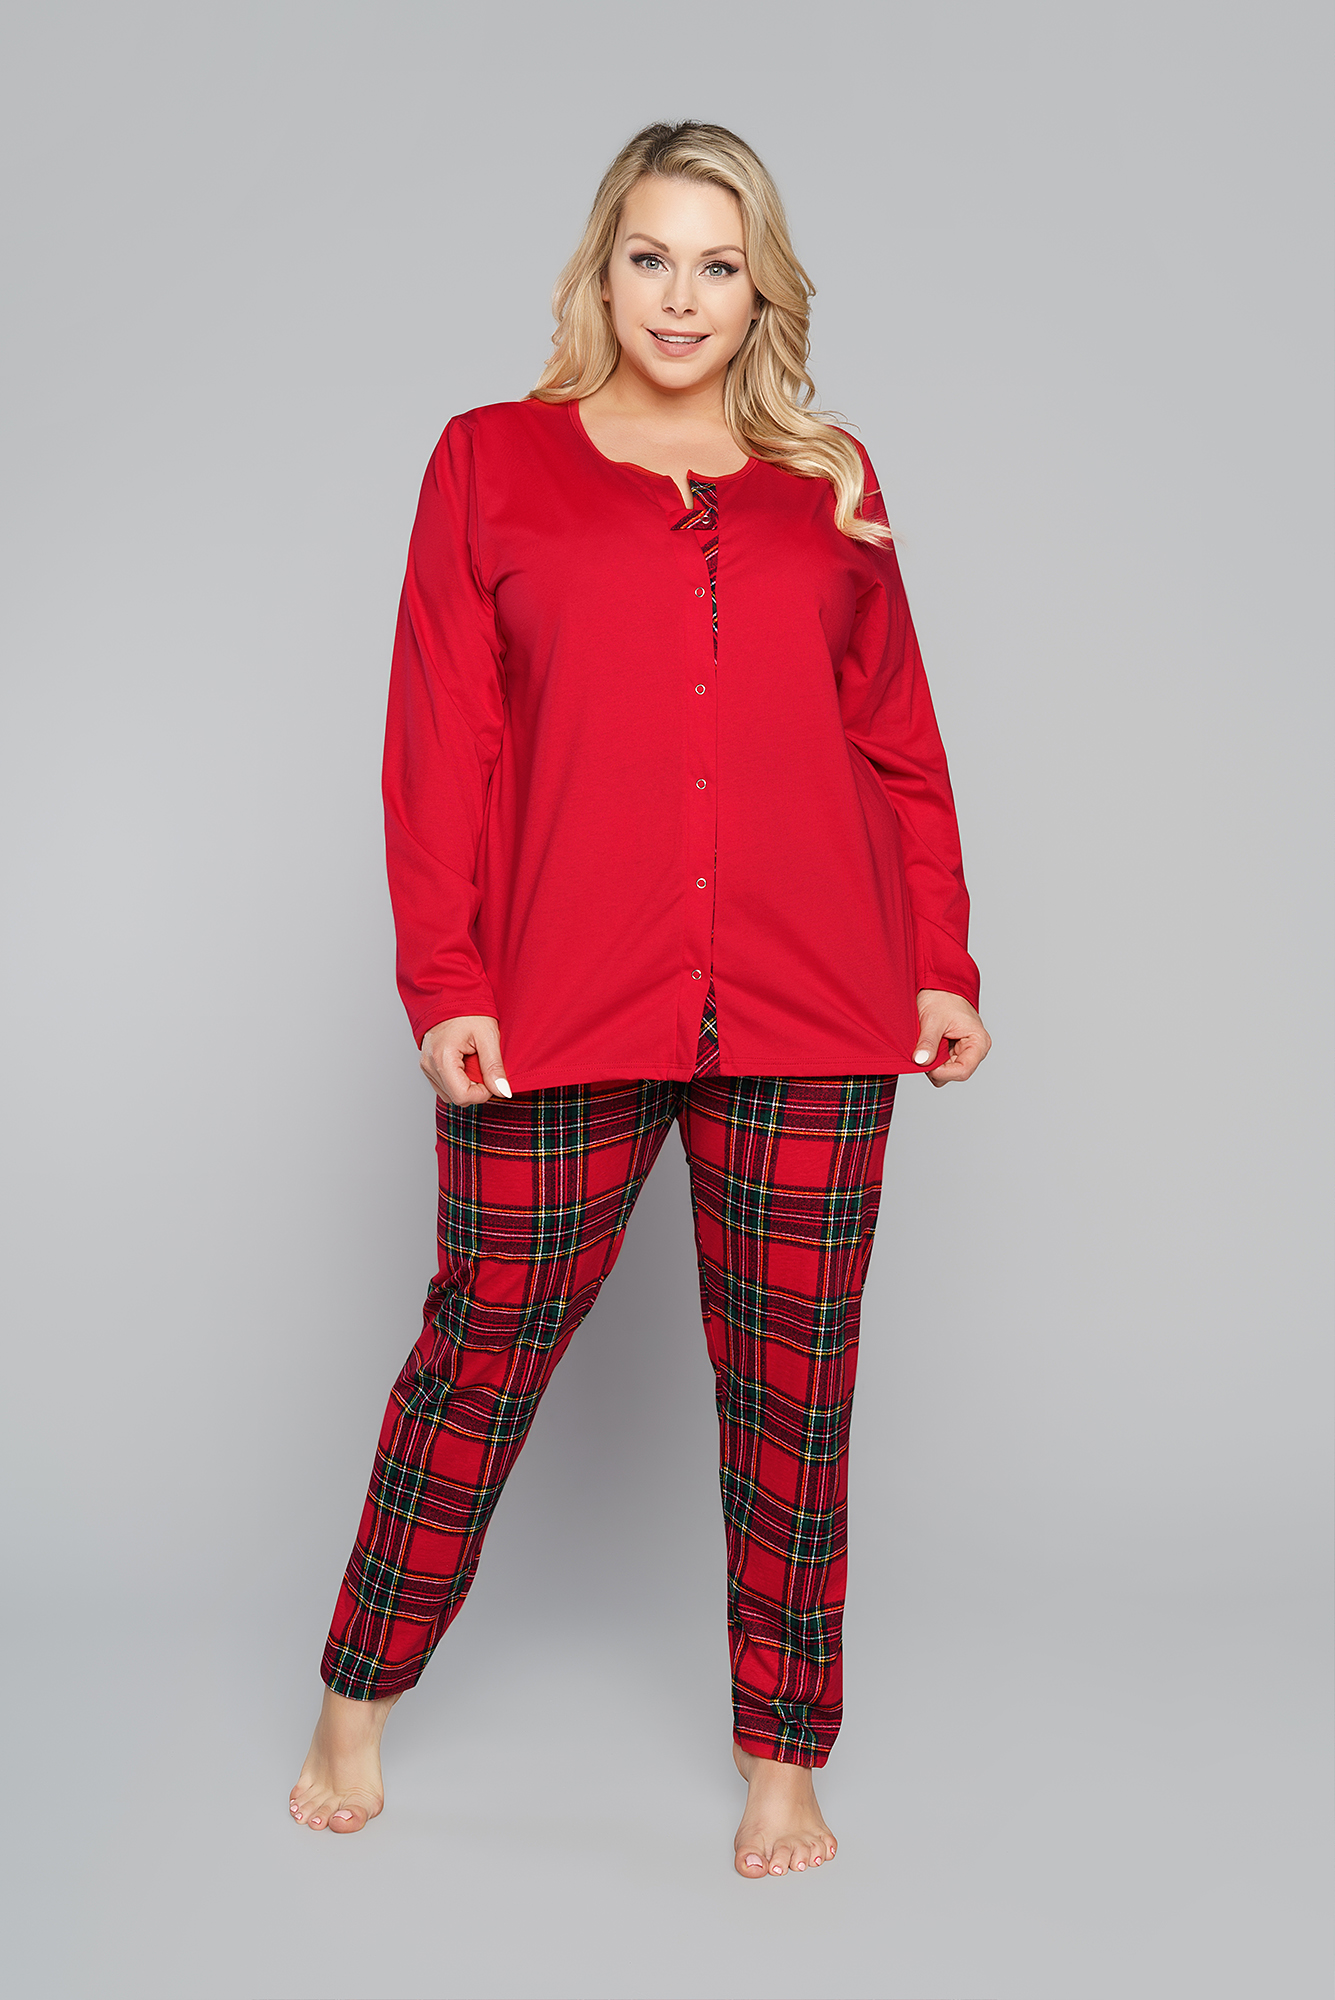 Zorza women's pyjamas - long sleeves, long legs - red/print